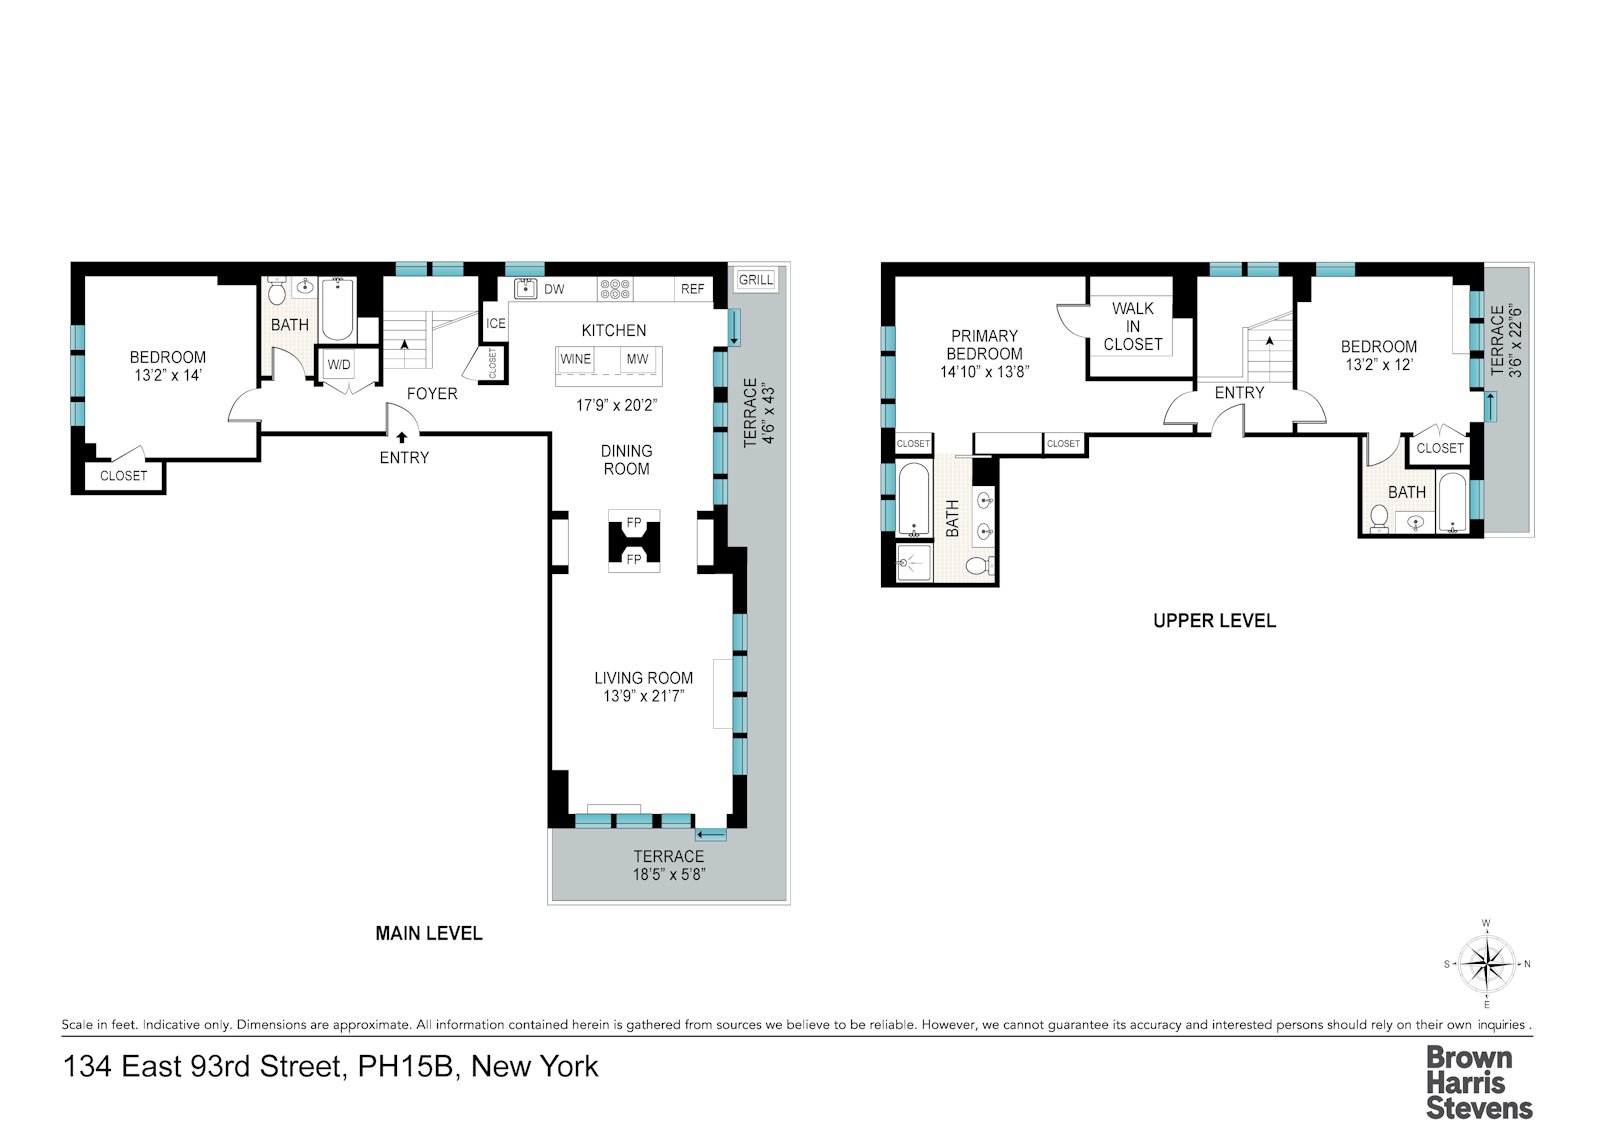 Floorplan for 134 East 93rd Street, PH15B